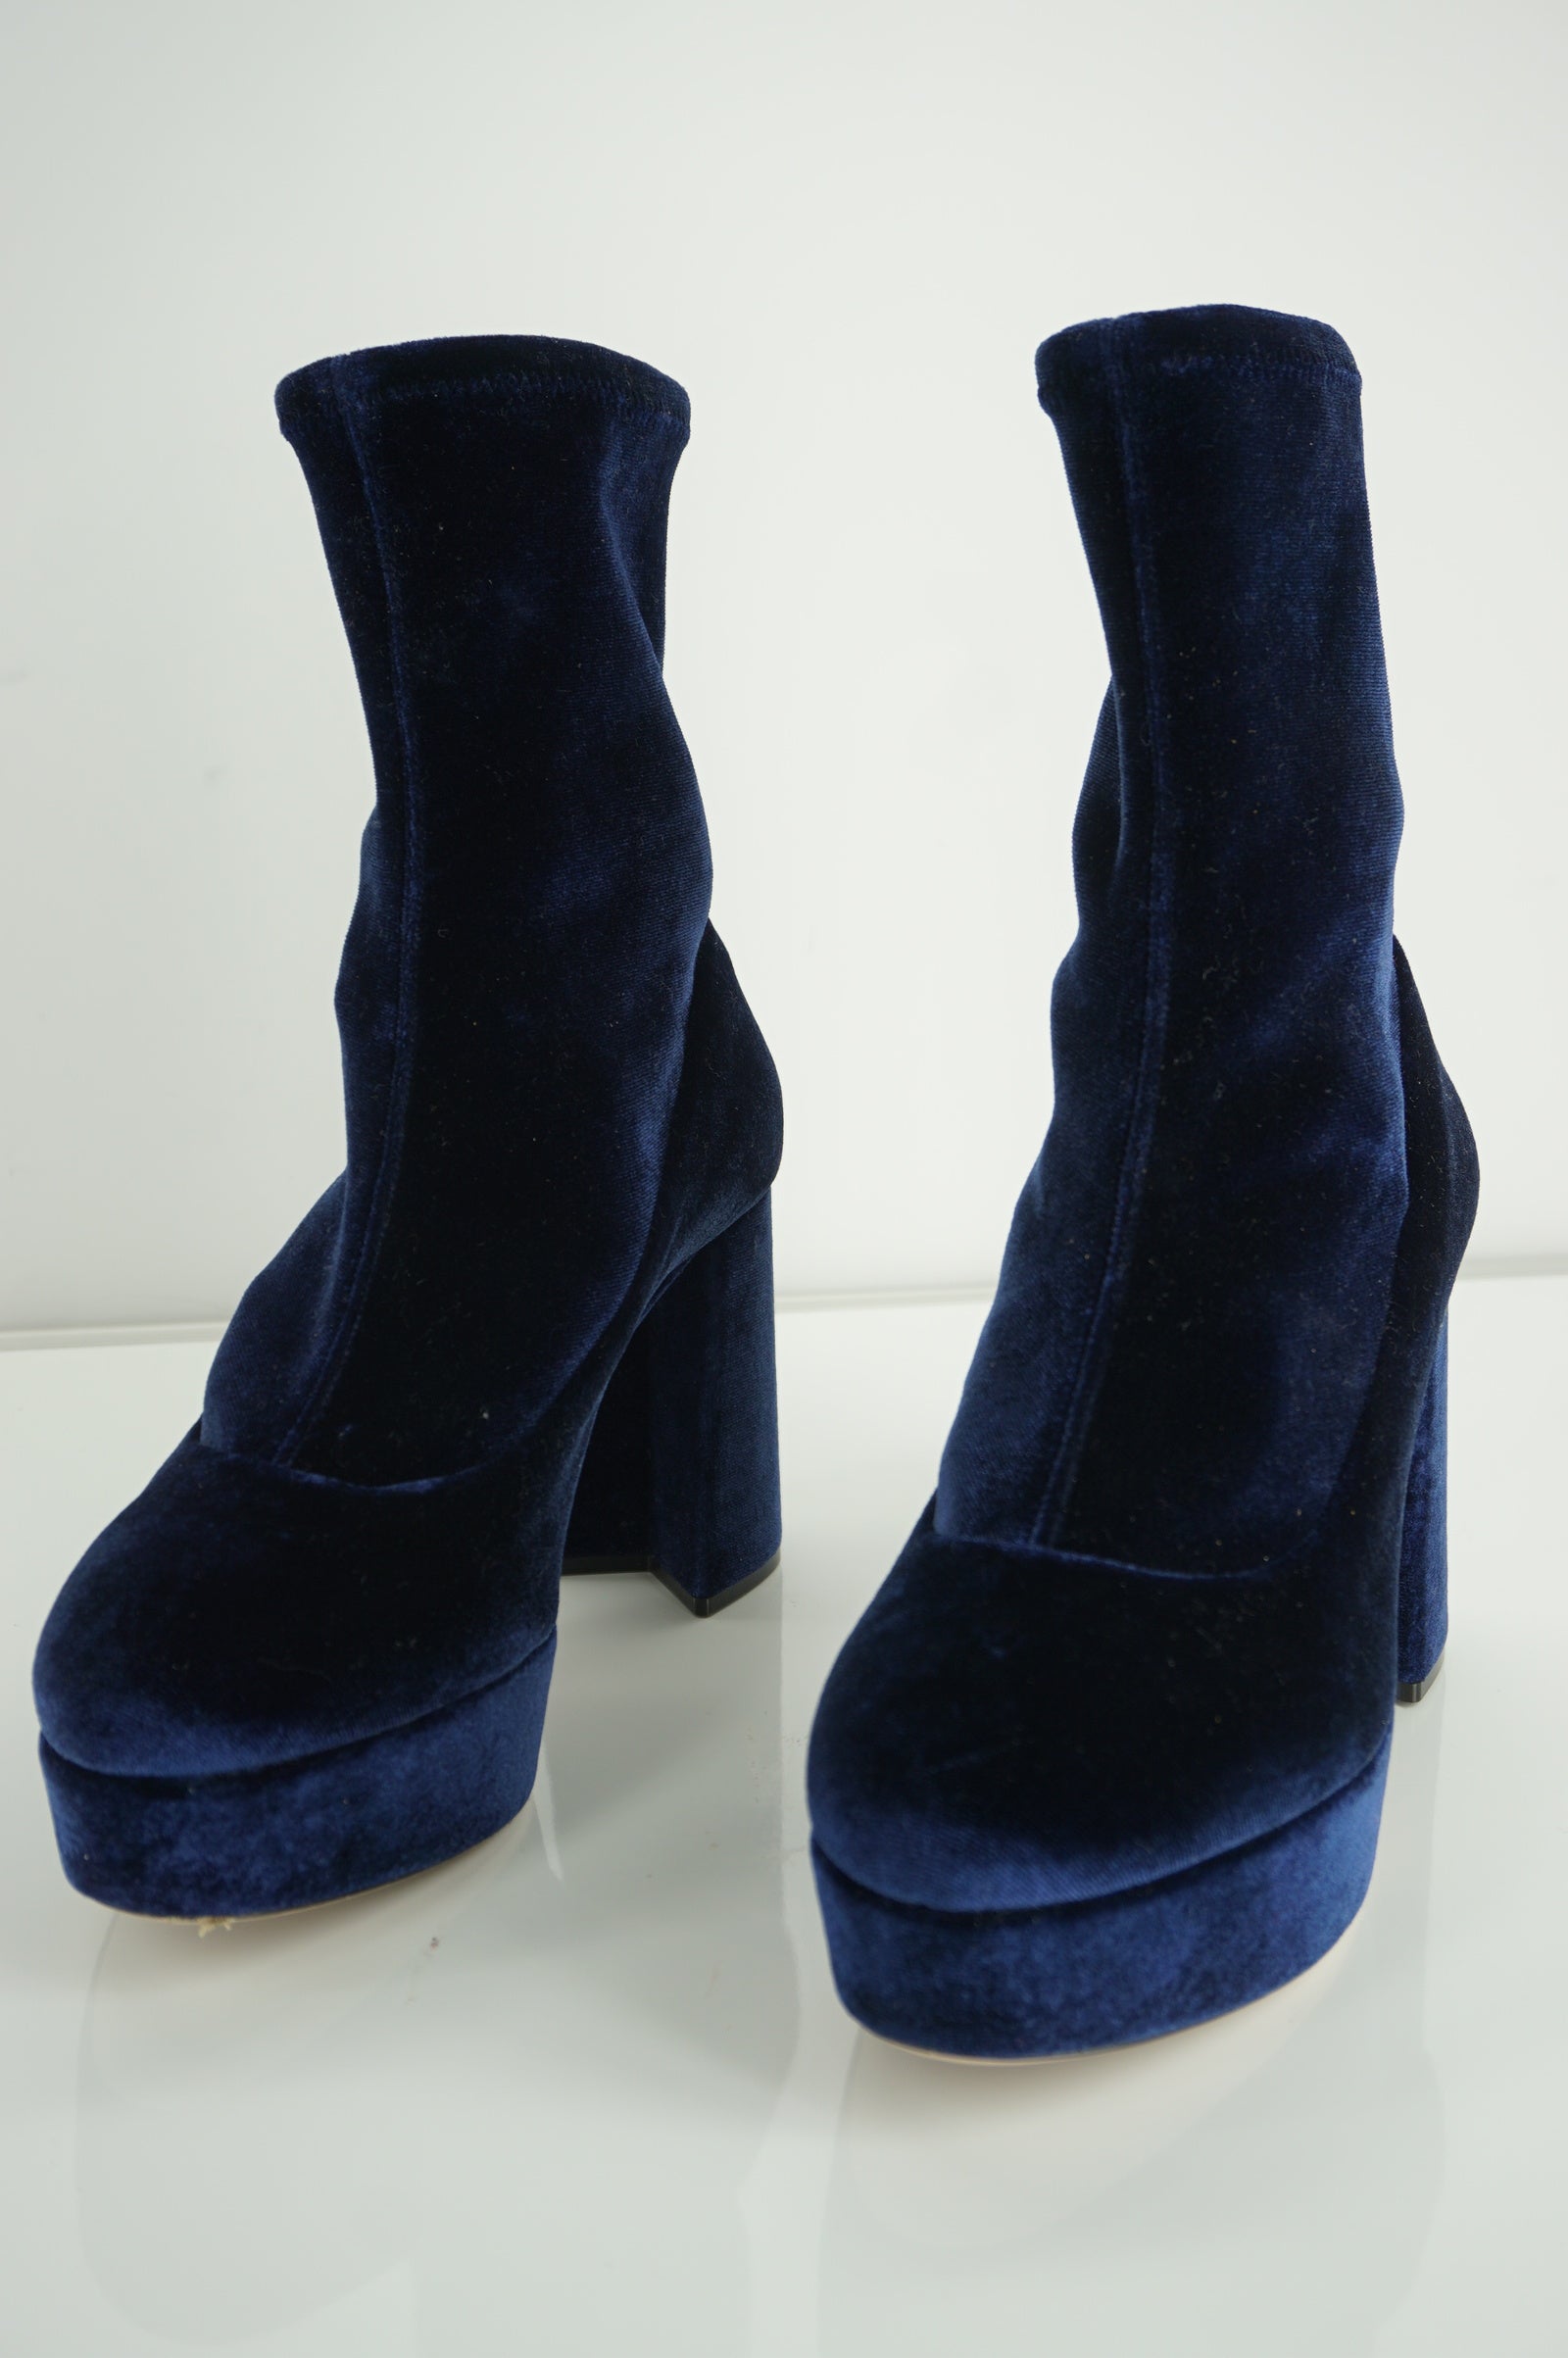 Miu Miu Blue Velvet Stretch Block Heel Platform Ankle Boots Size 35.5 $890